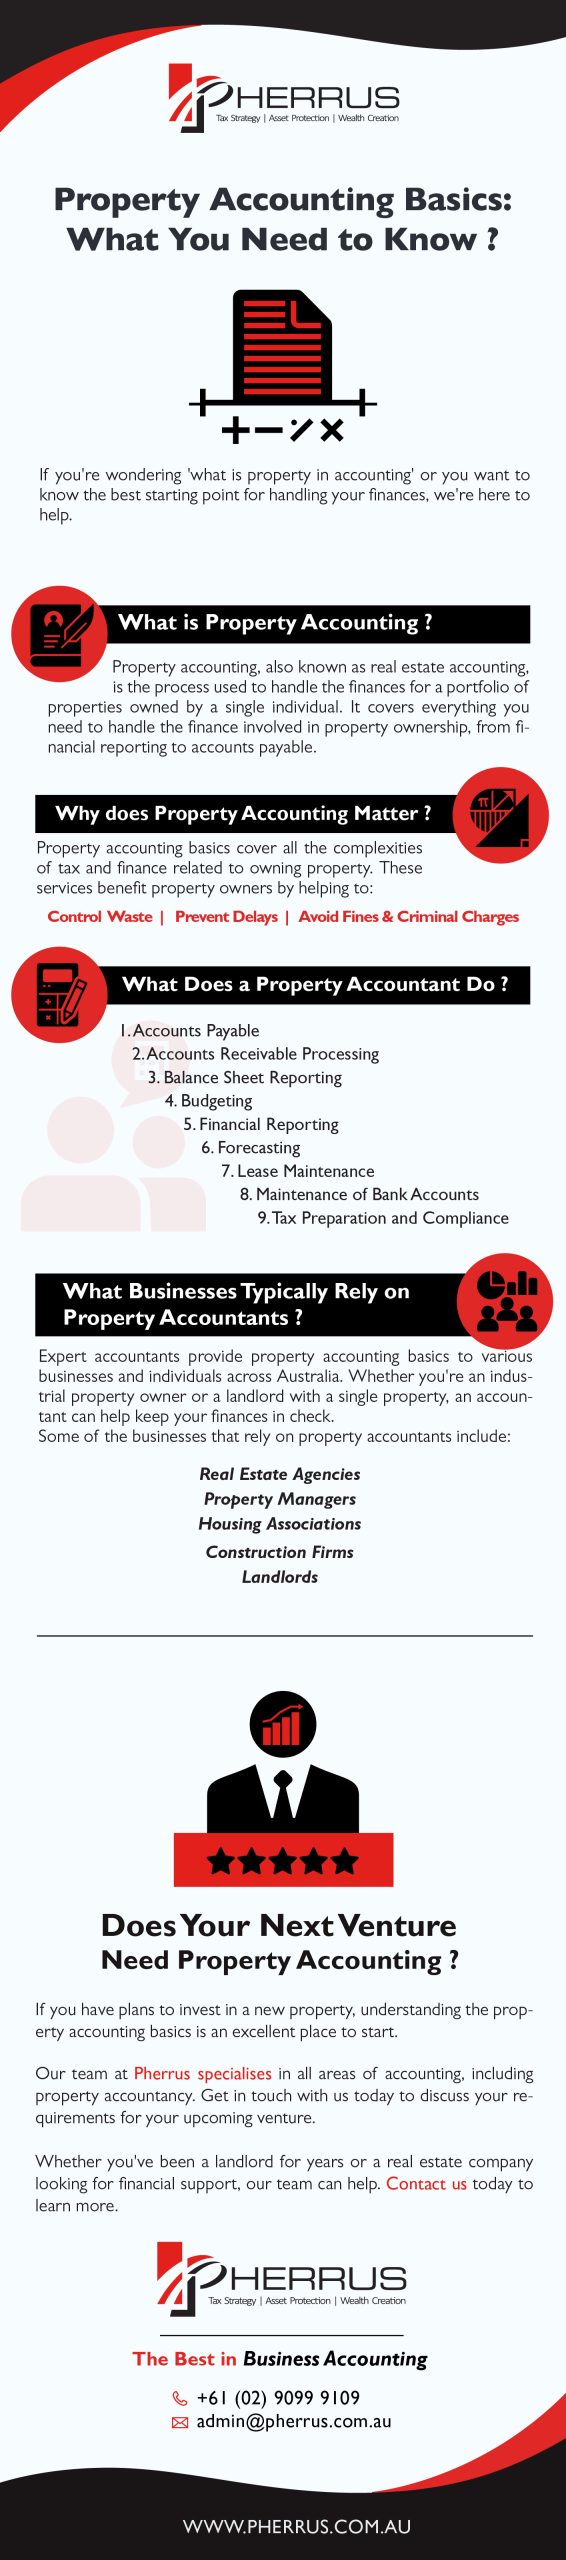 Property Accounting Basics Infographic